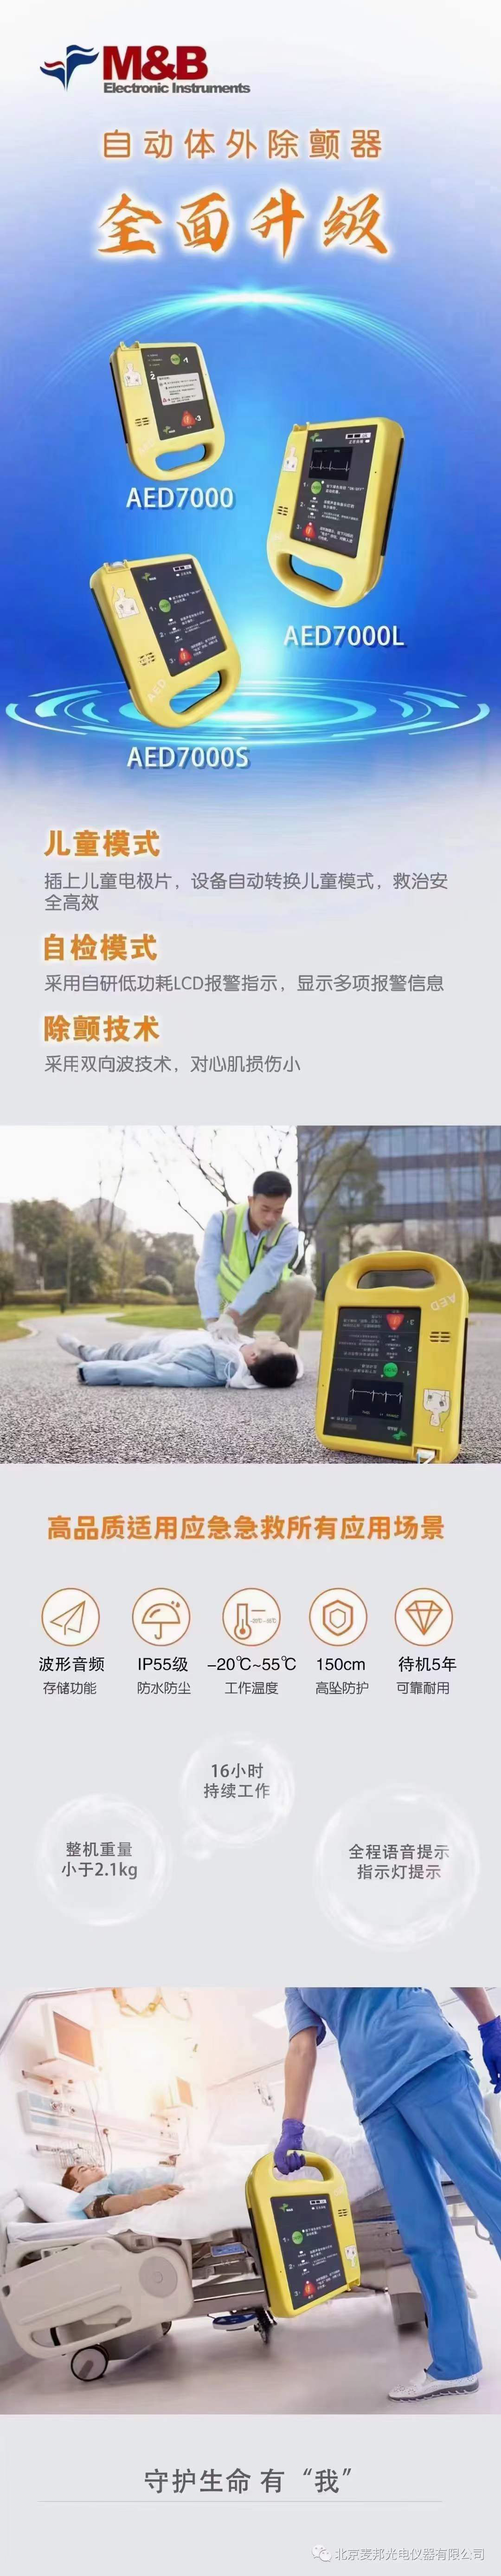 麥邦AED除顫儀 7000S.jpg